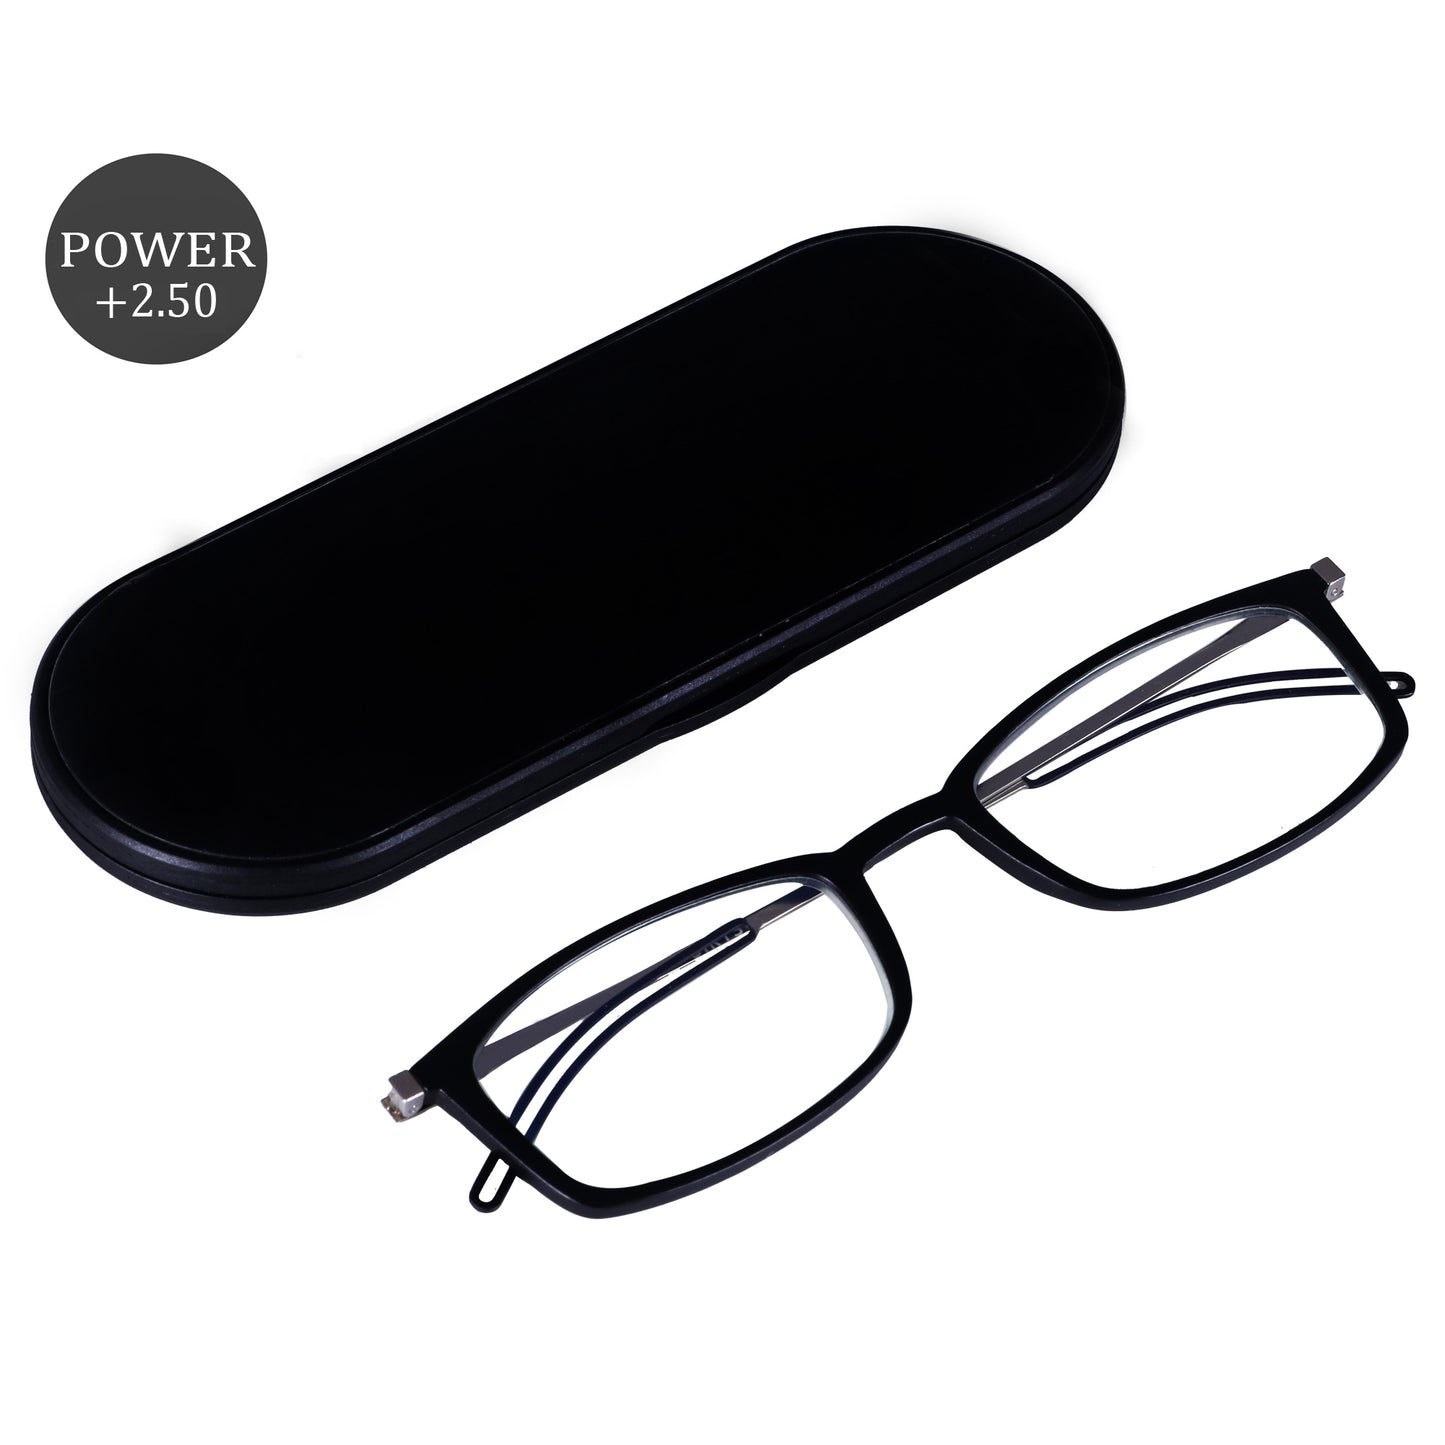 Sirts Thin Black Rectangular Reading Glasses +2.50